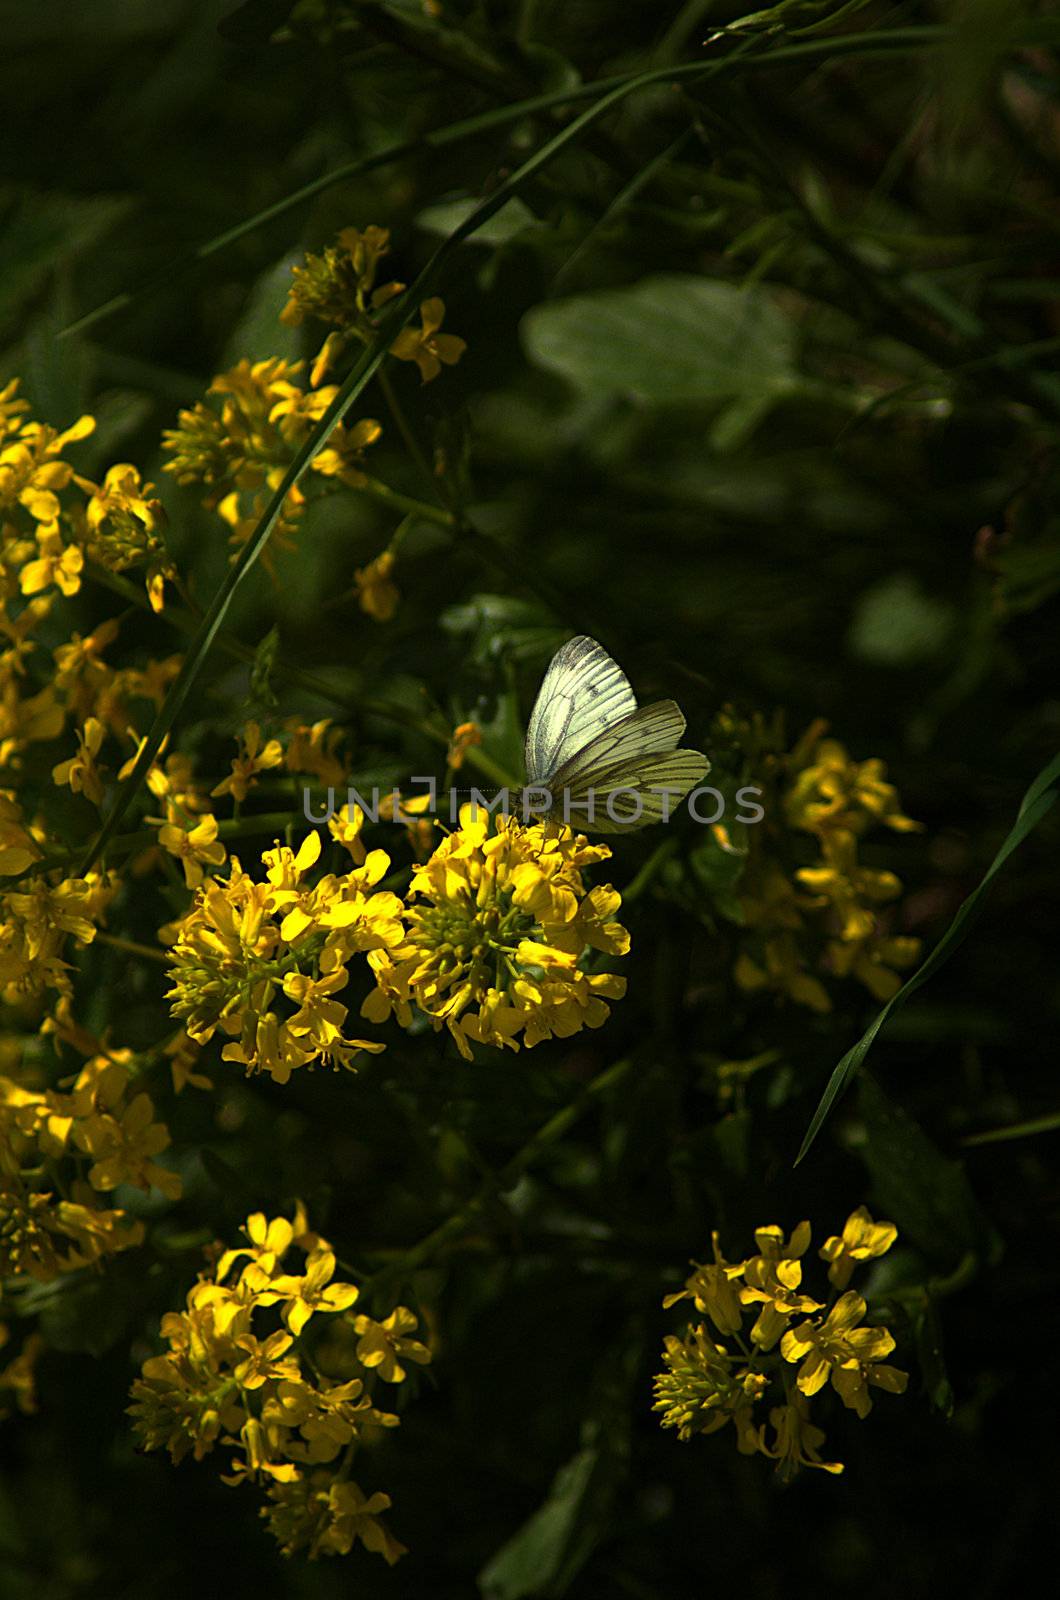 Butterfly on yellow flower by sundaune